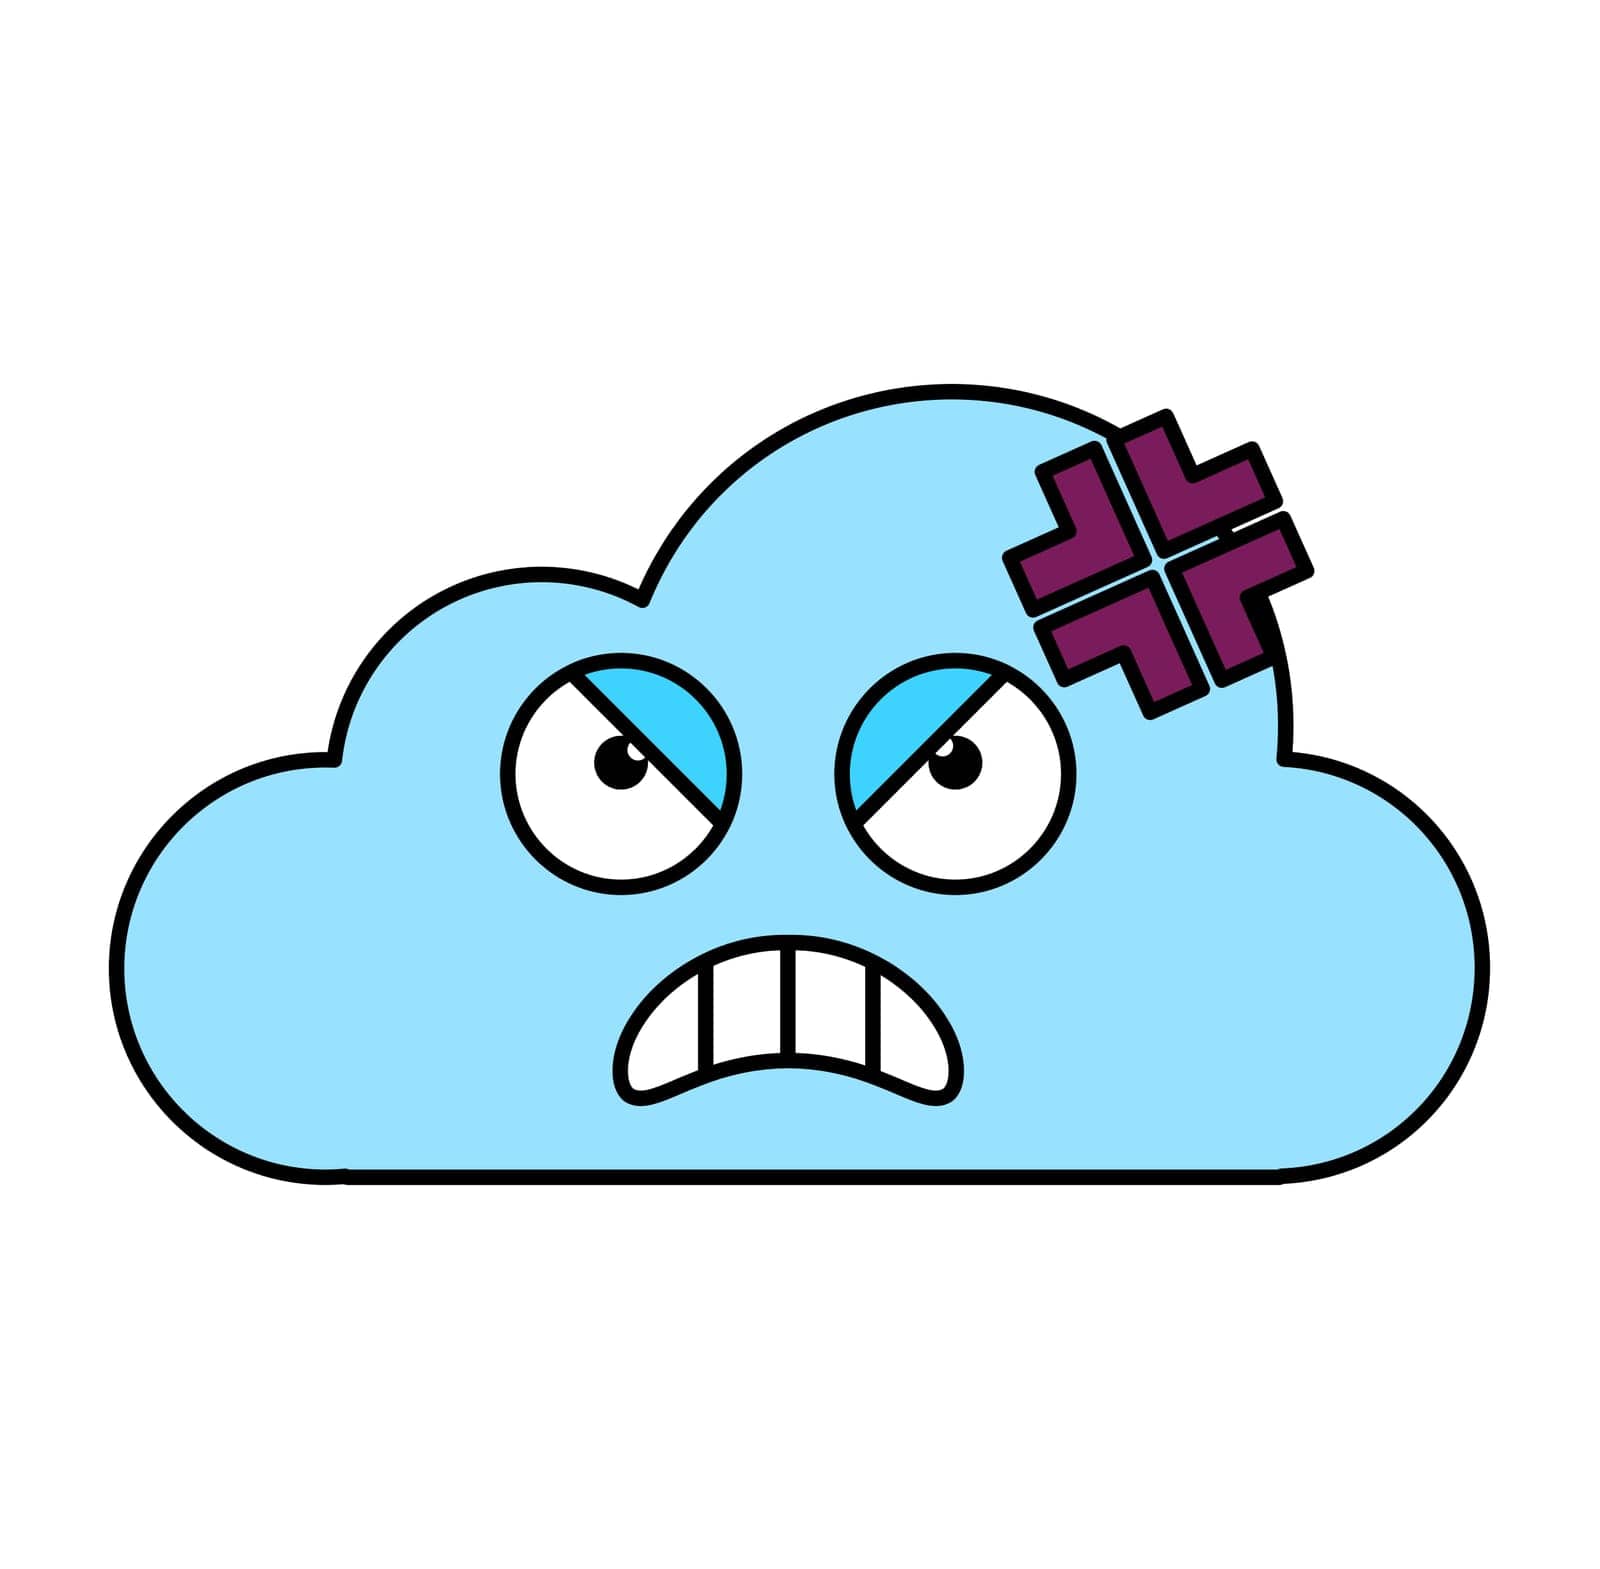 Mad storm cloud sticker outline illustration. Angry, bad mood emoticon. Social media cartoon emoji